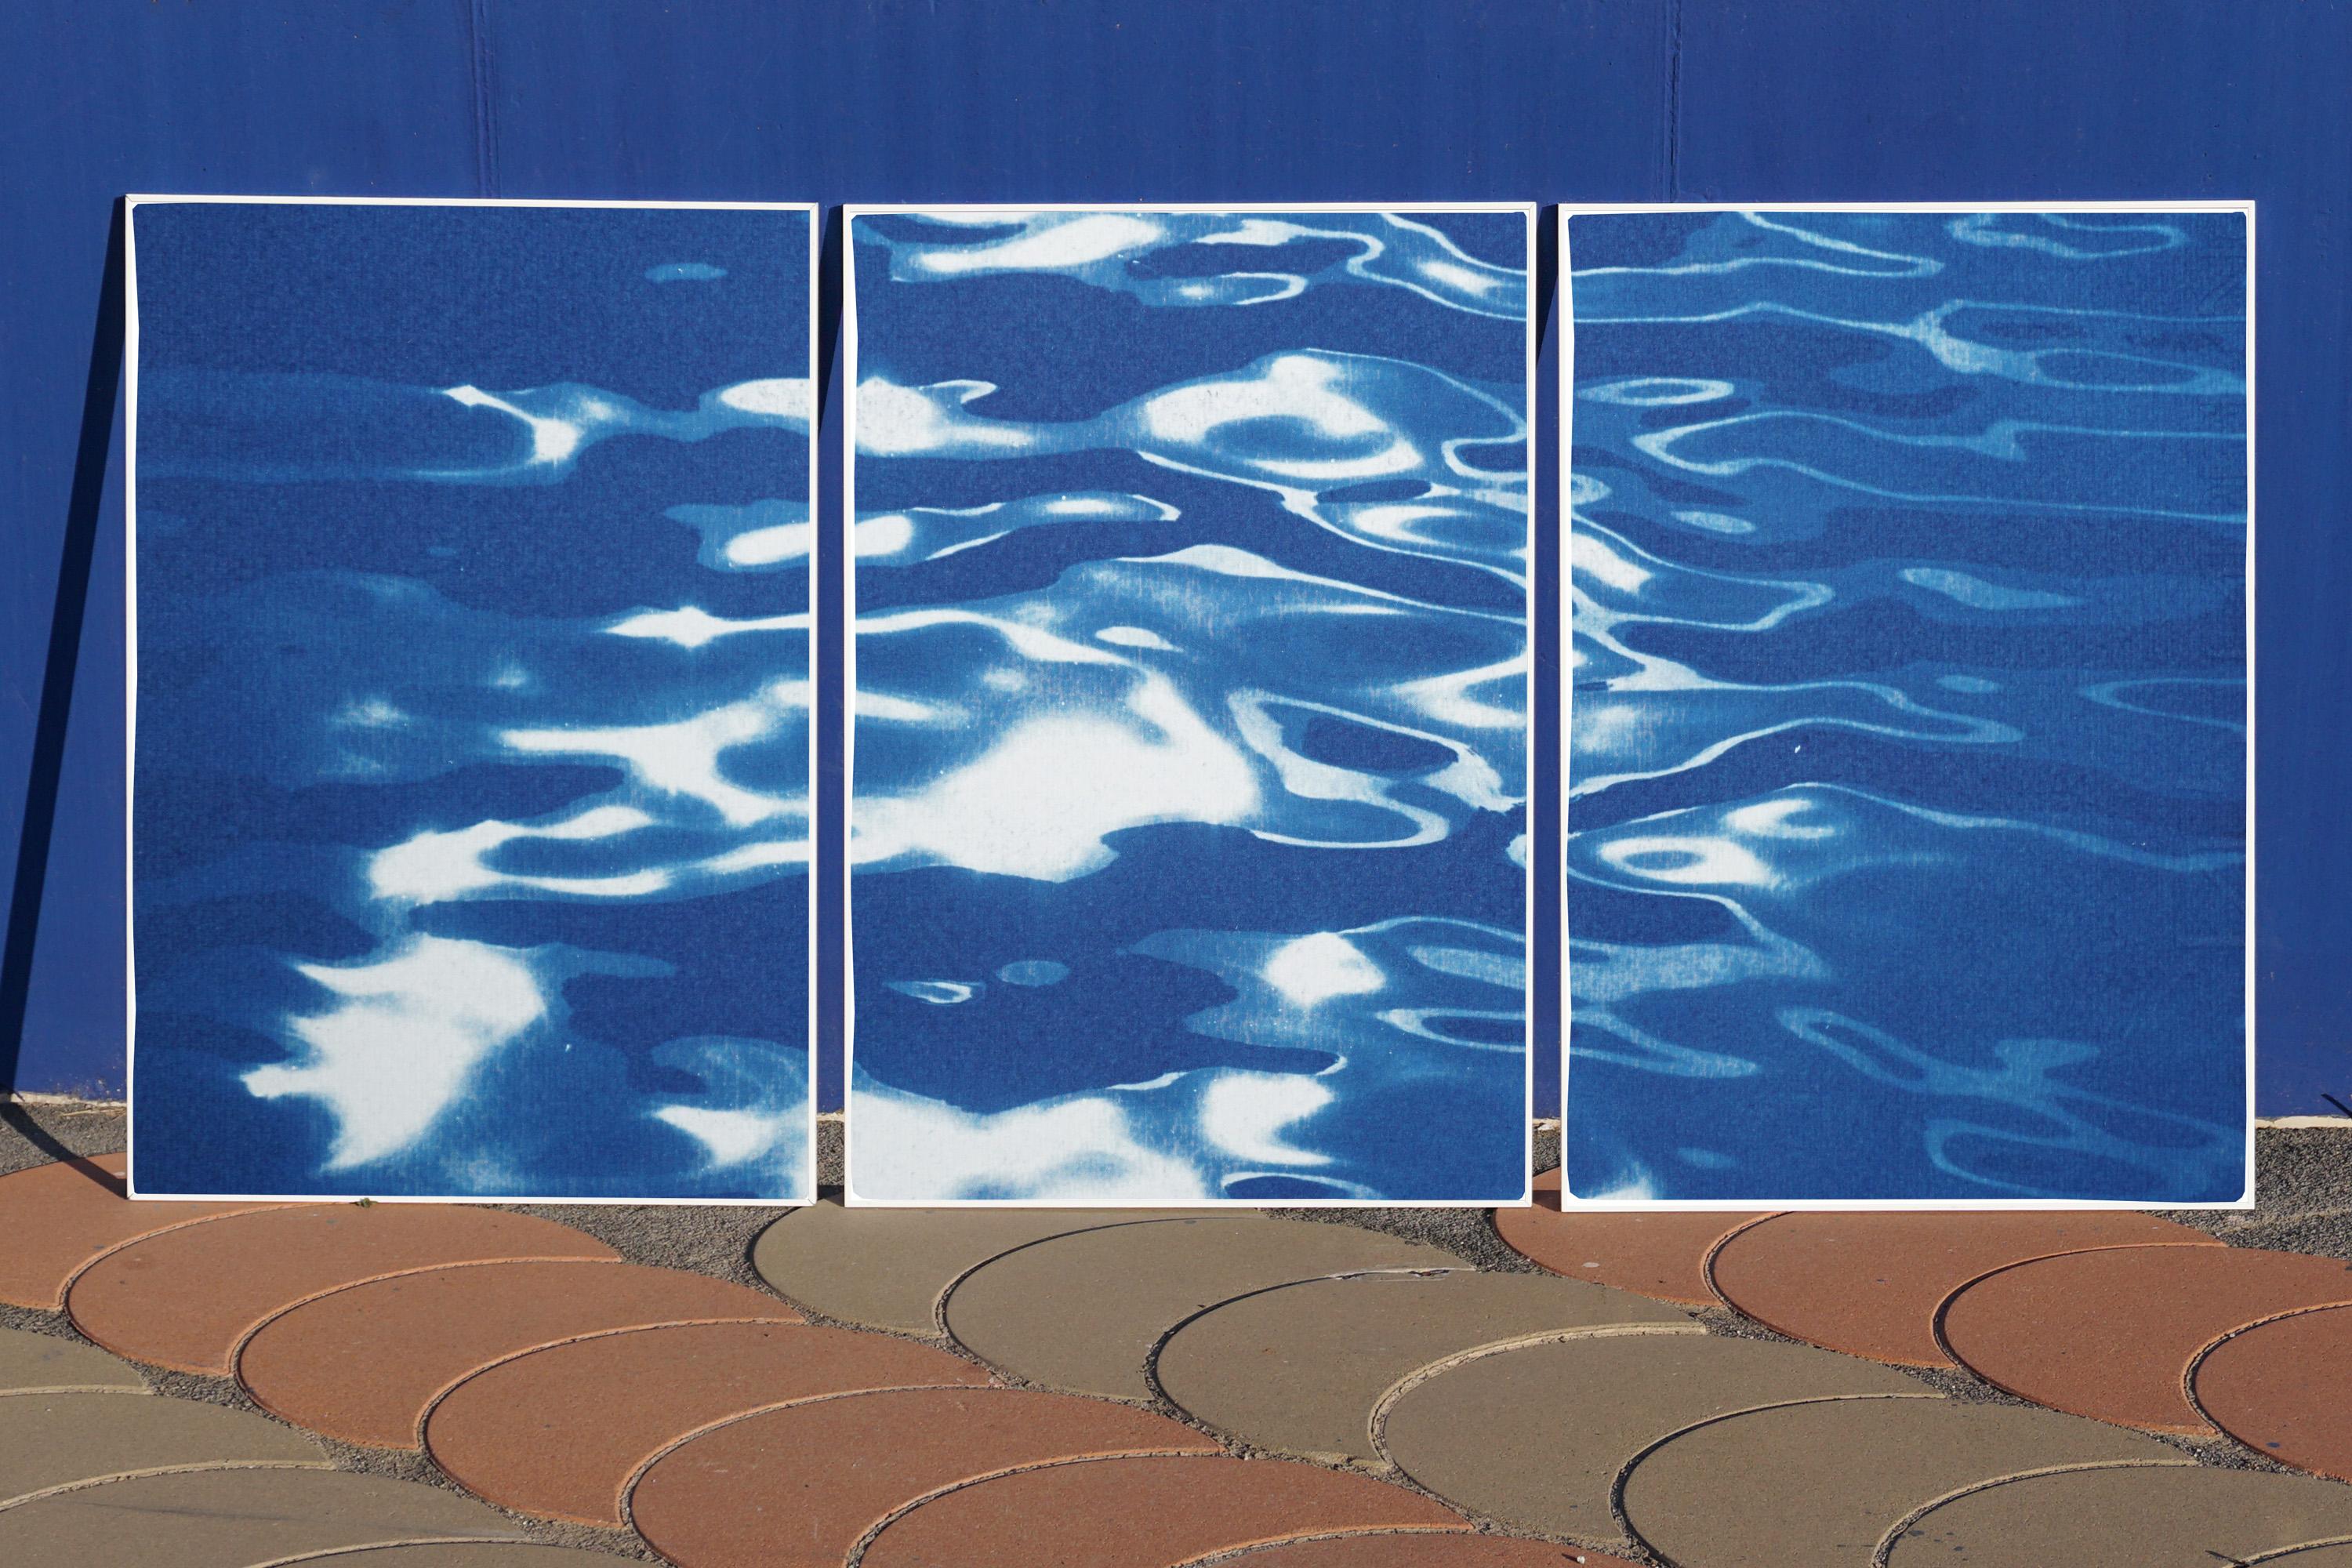 Lido Island Reflections, Venice Landscape Blue Tones, Minimal Cyanotype Print  4